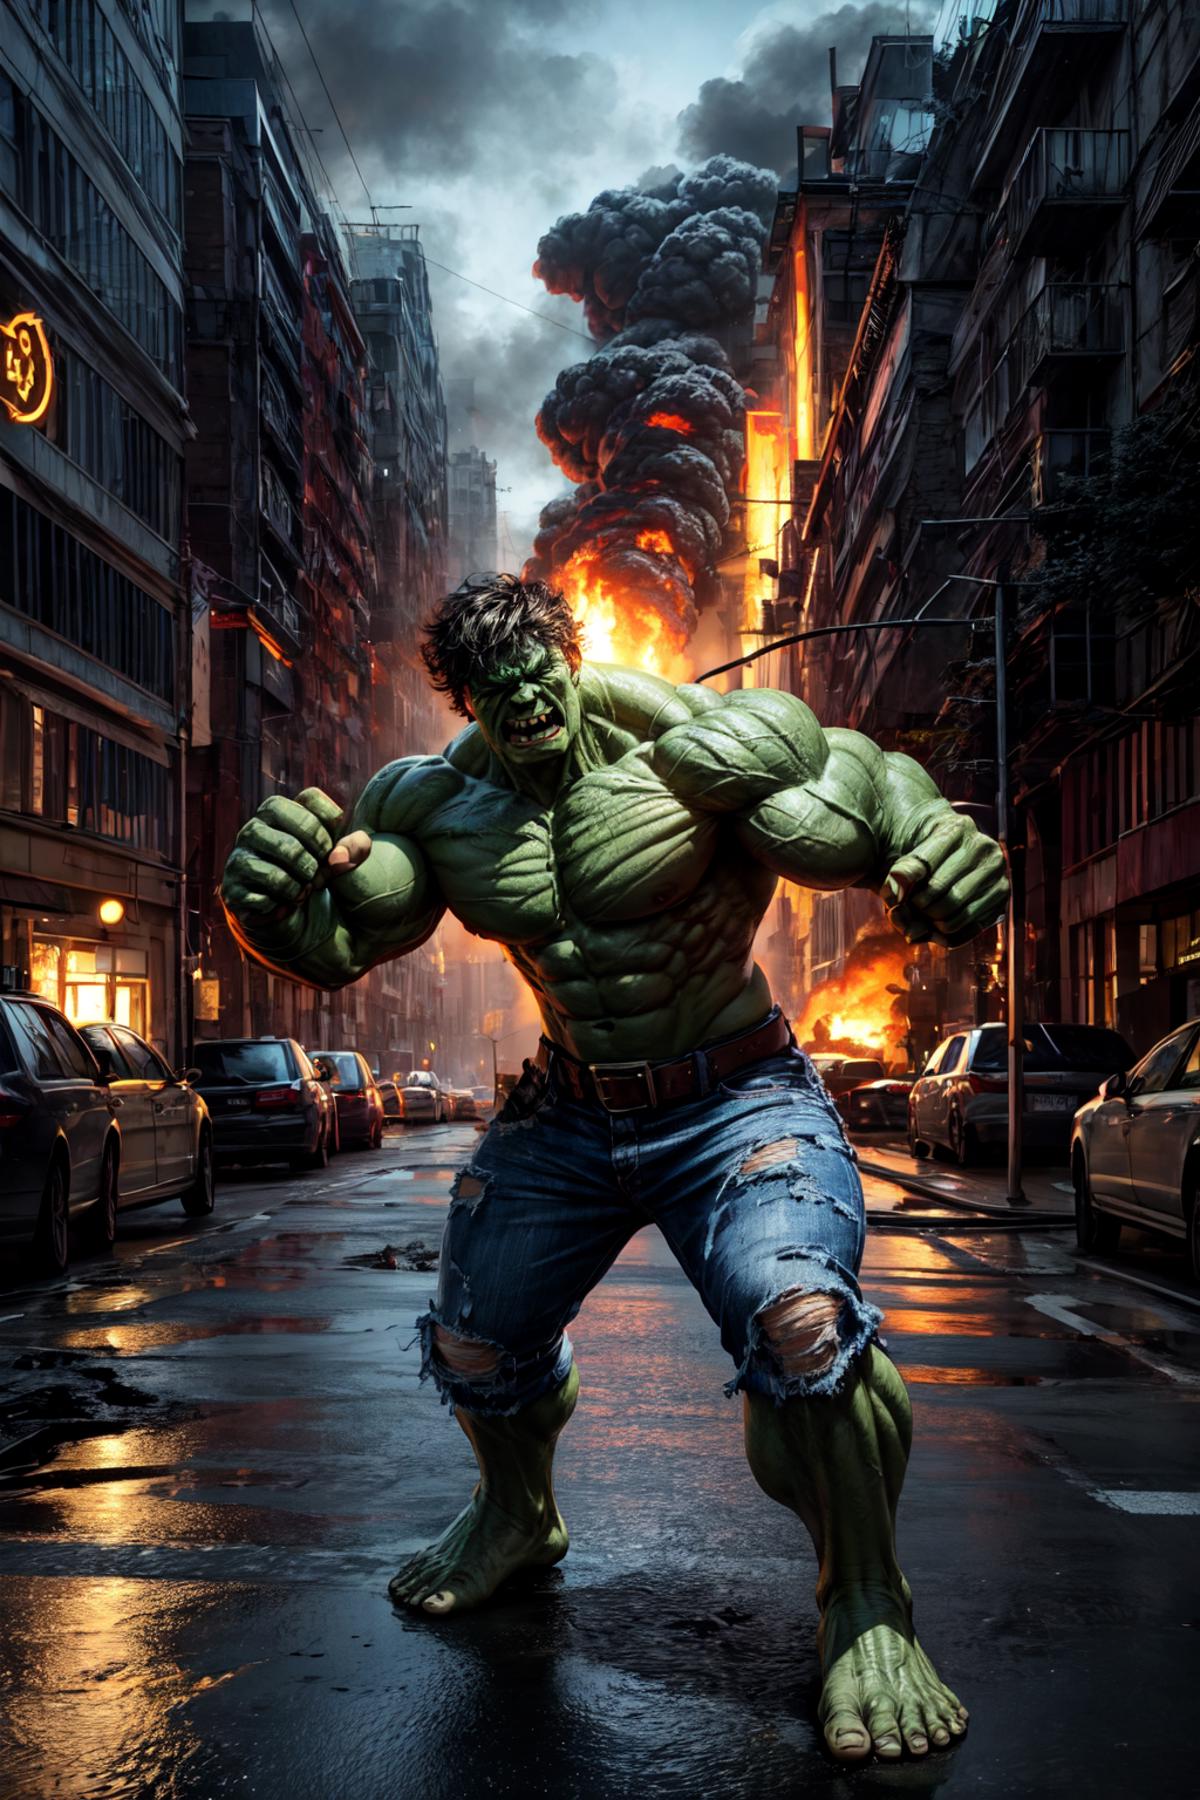 Hulk - LoHa image by crazycamel